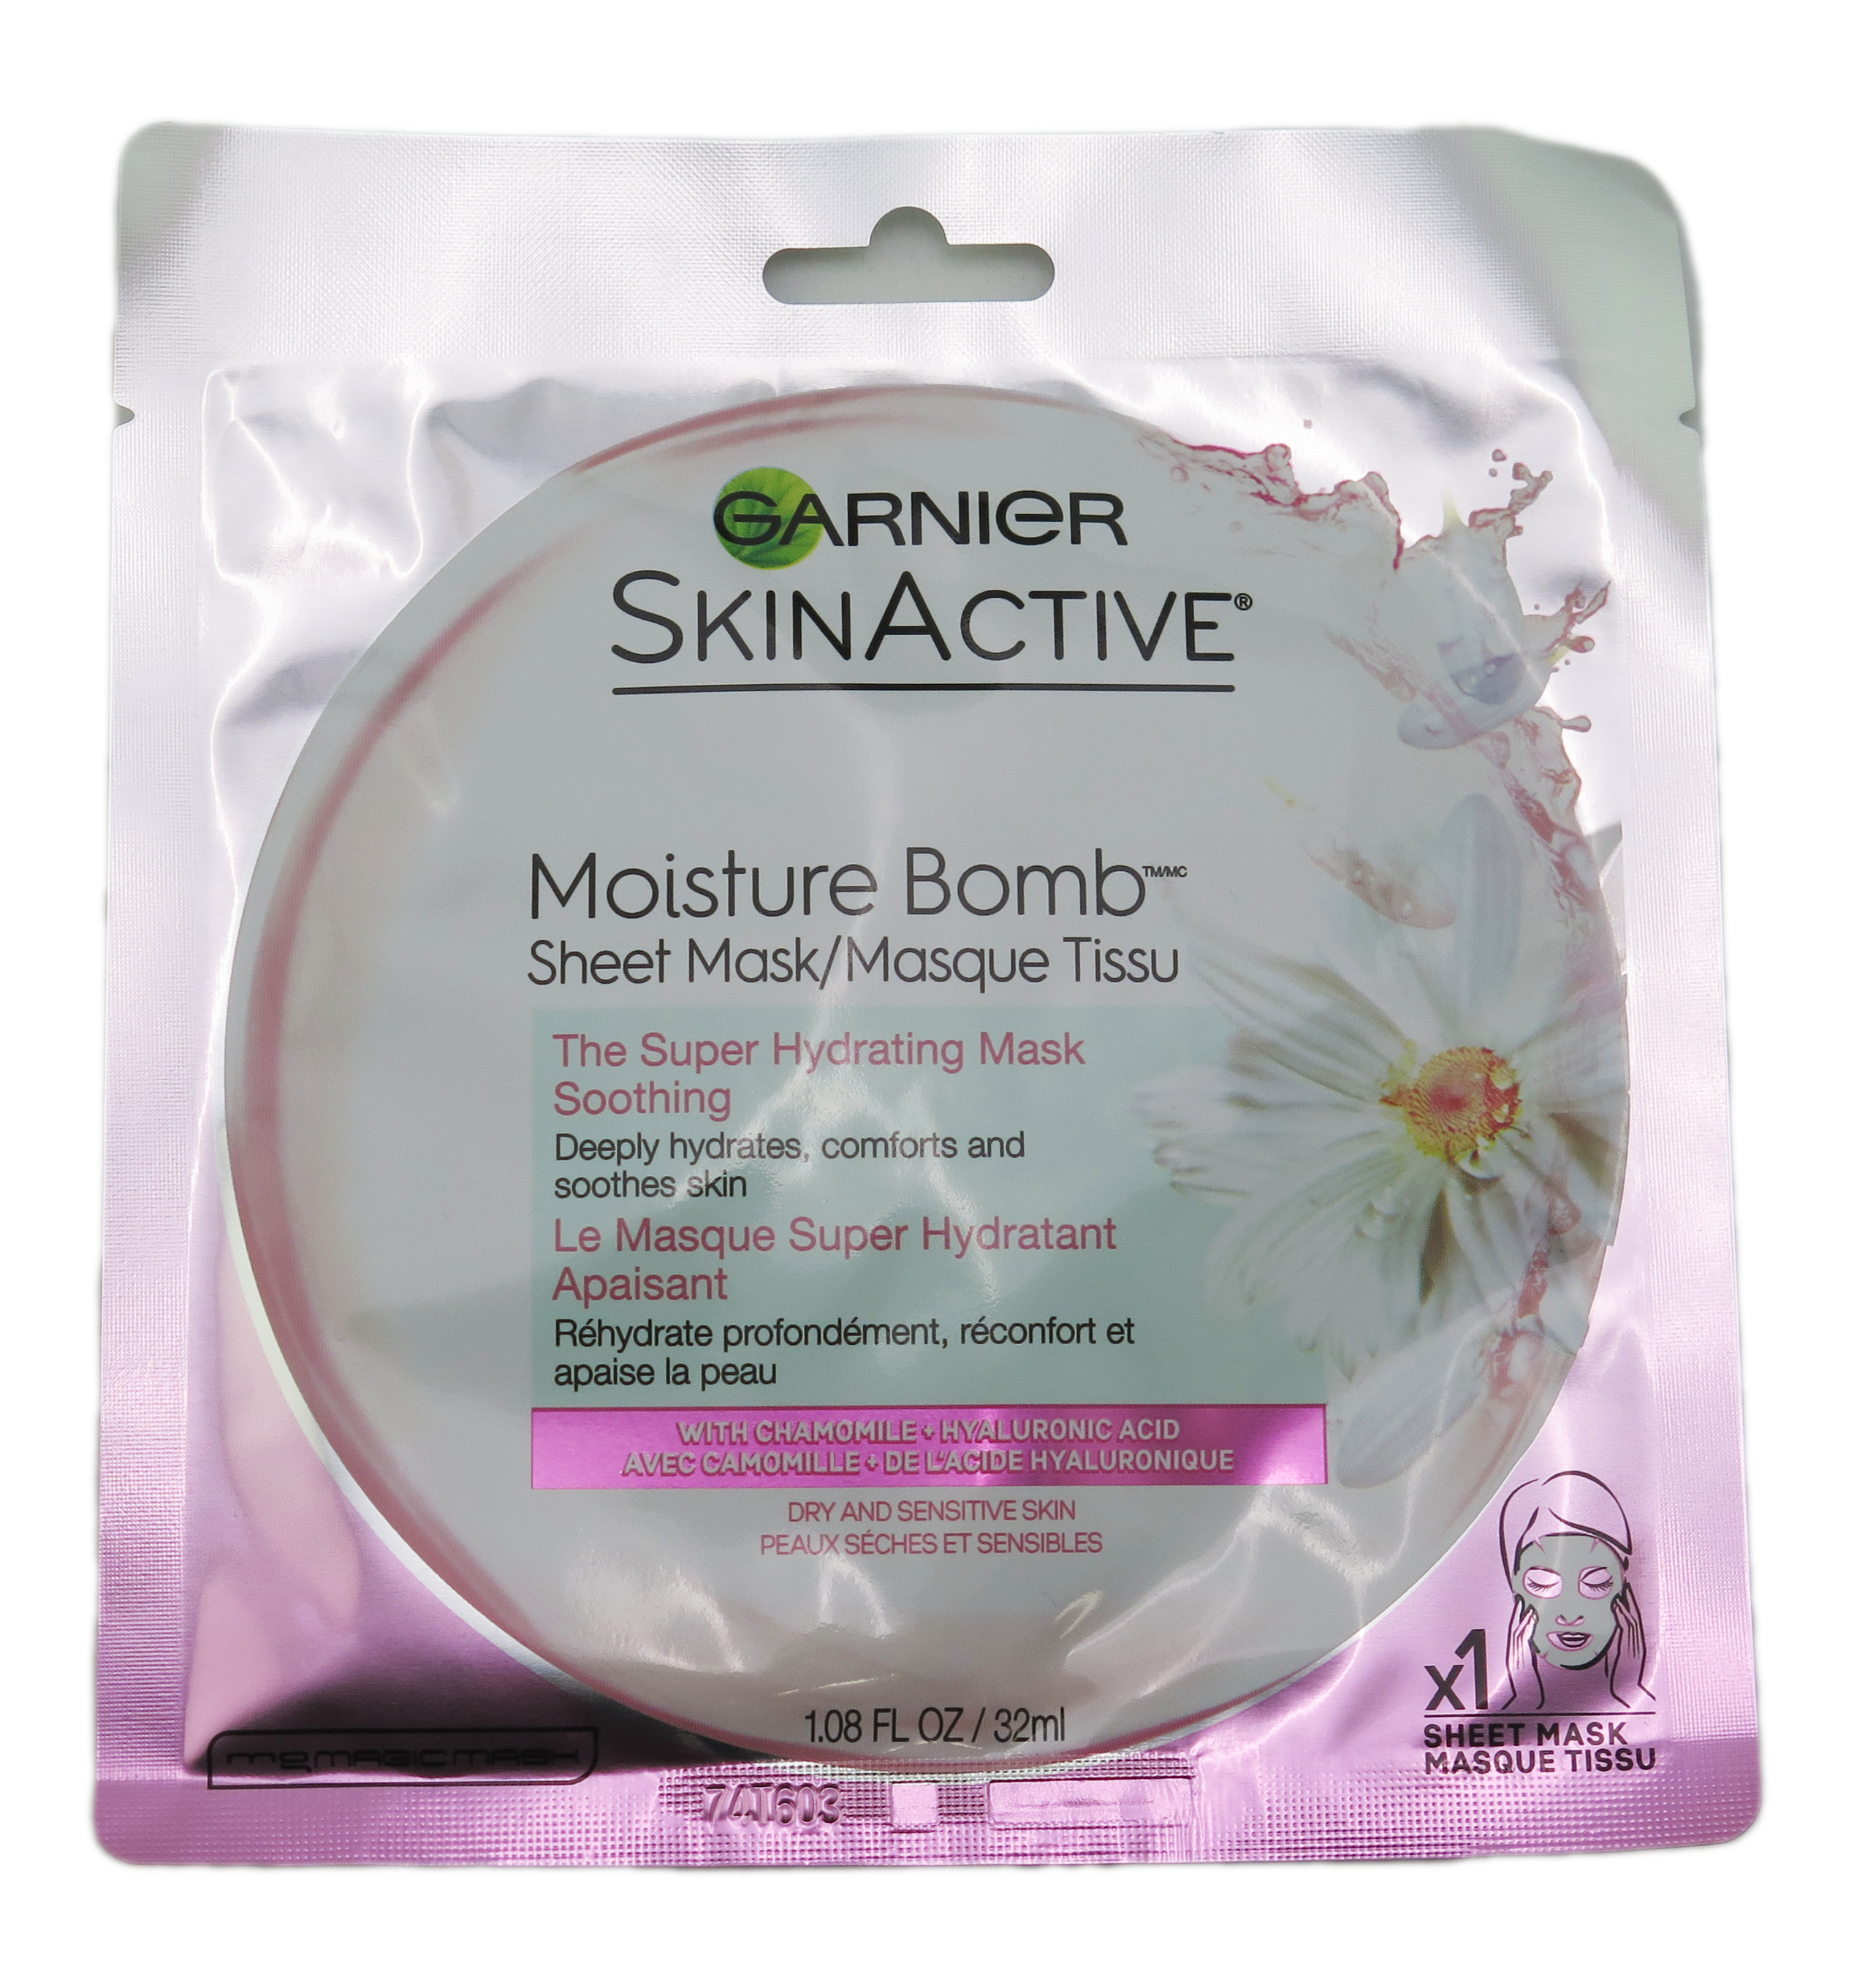 Garnier SkinActive Moisture Bomb The Super Hydrating Soothing Sheet Mask 1.08 fl oz